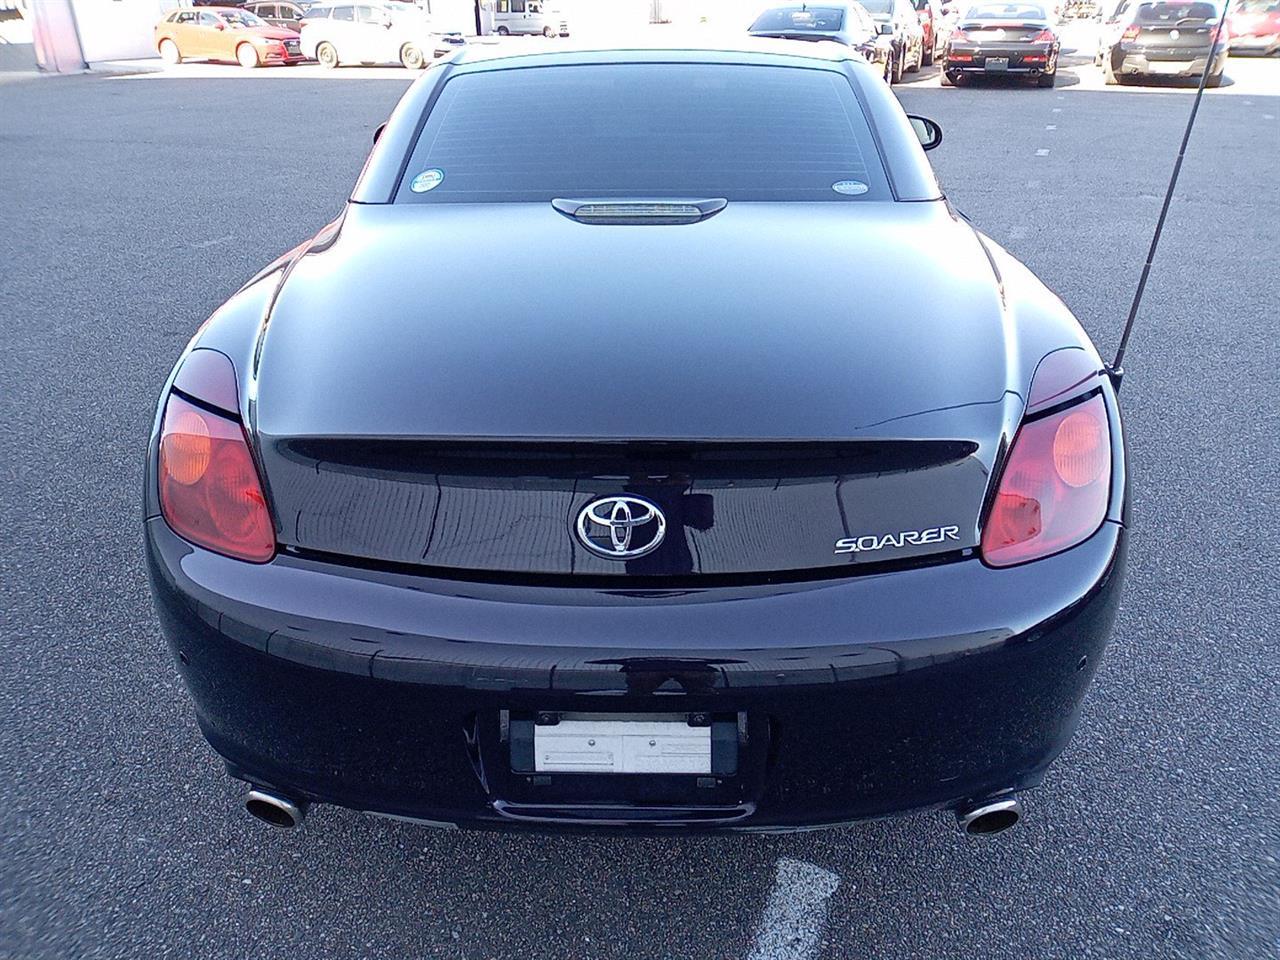 image-5, 2001 Toyota Soarer at Dunedin